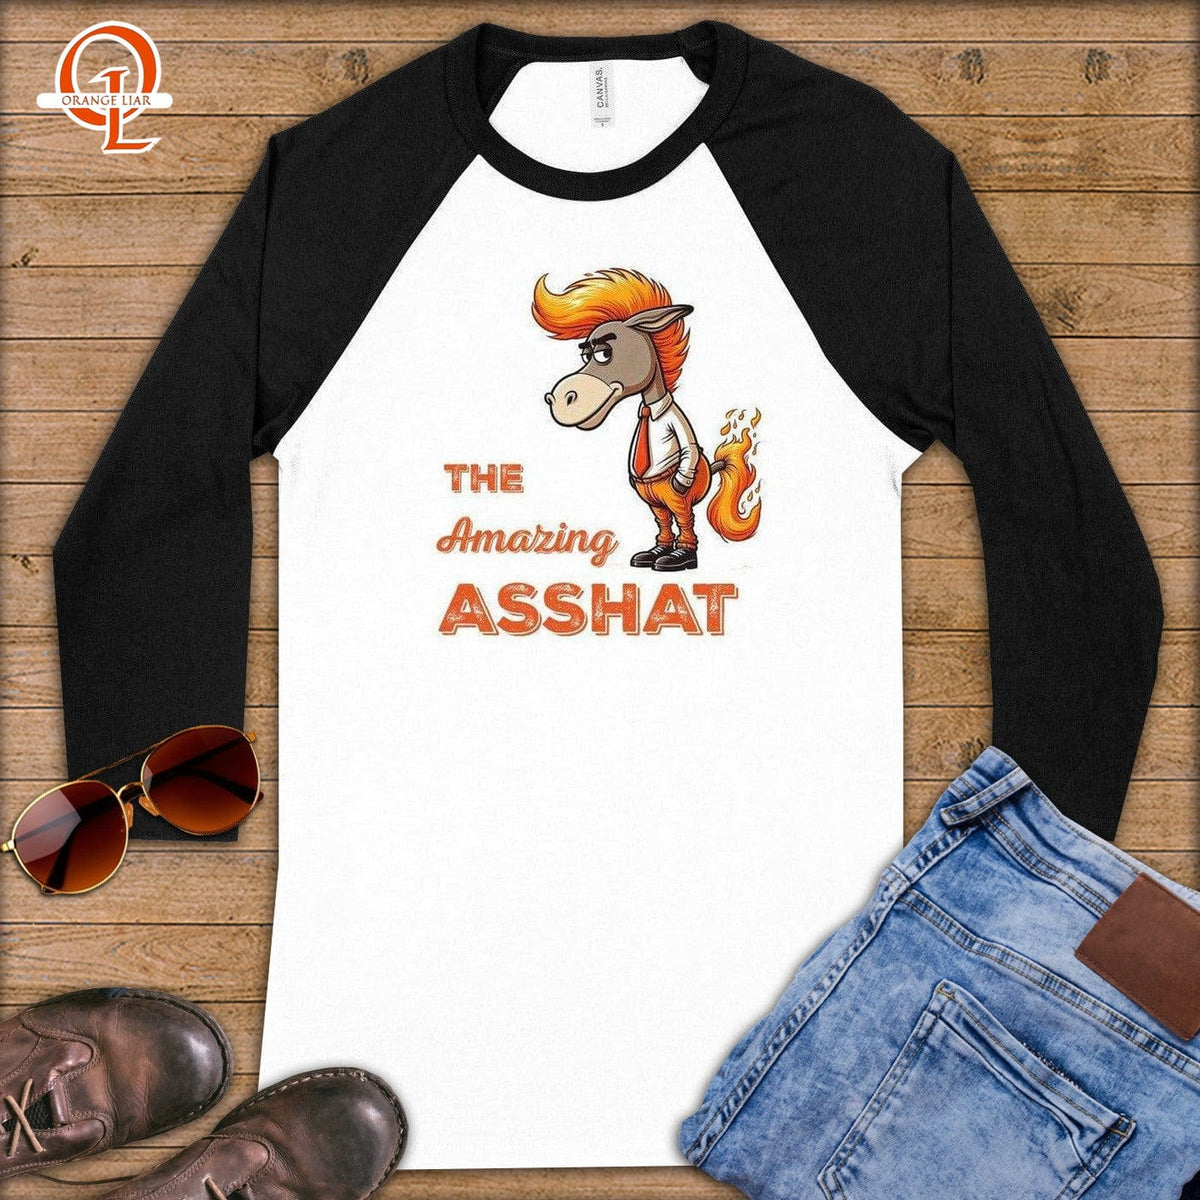 The Amazing Asshat ~ Baseball 3/4 Sleeve Tee-Orange Liar